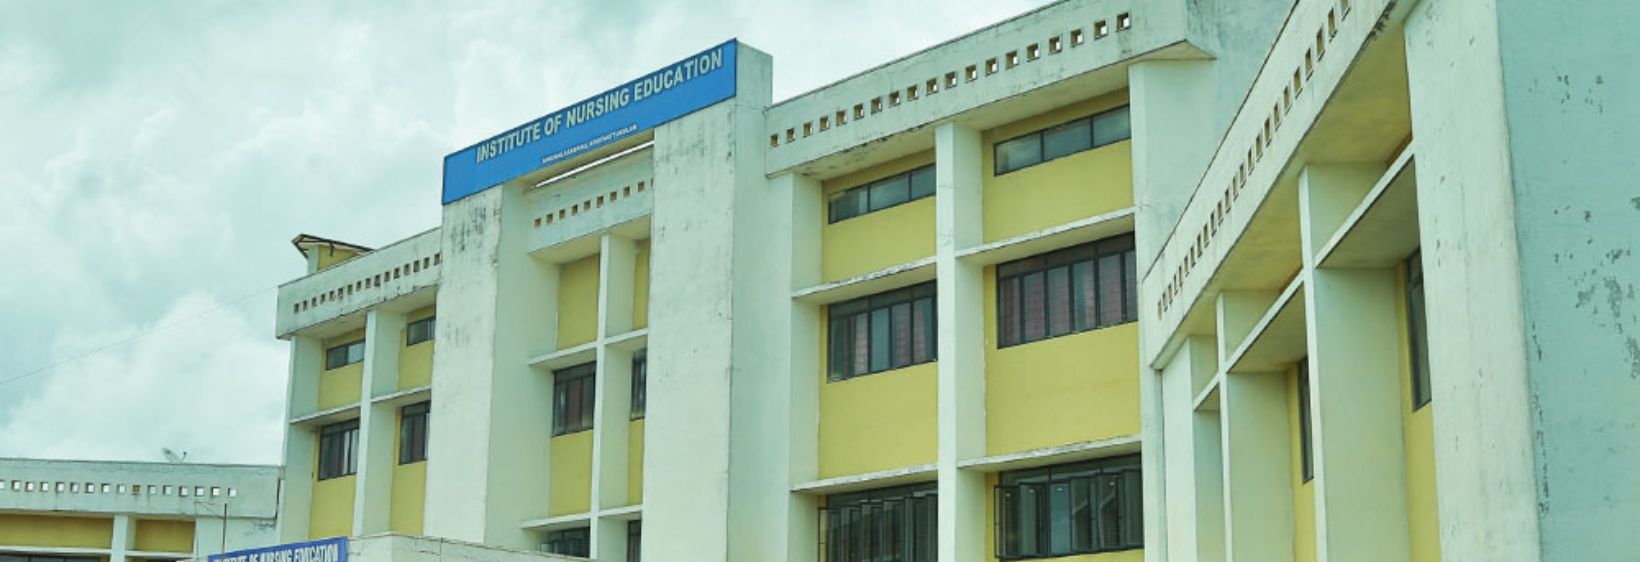 Instituite of Nursing Education - Ernakulam